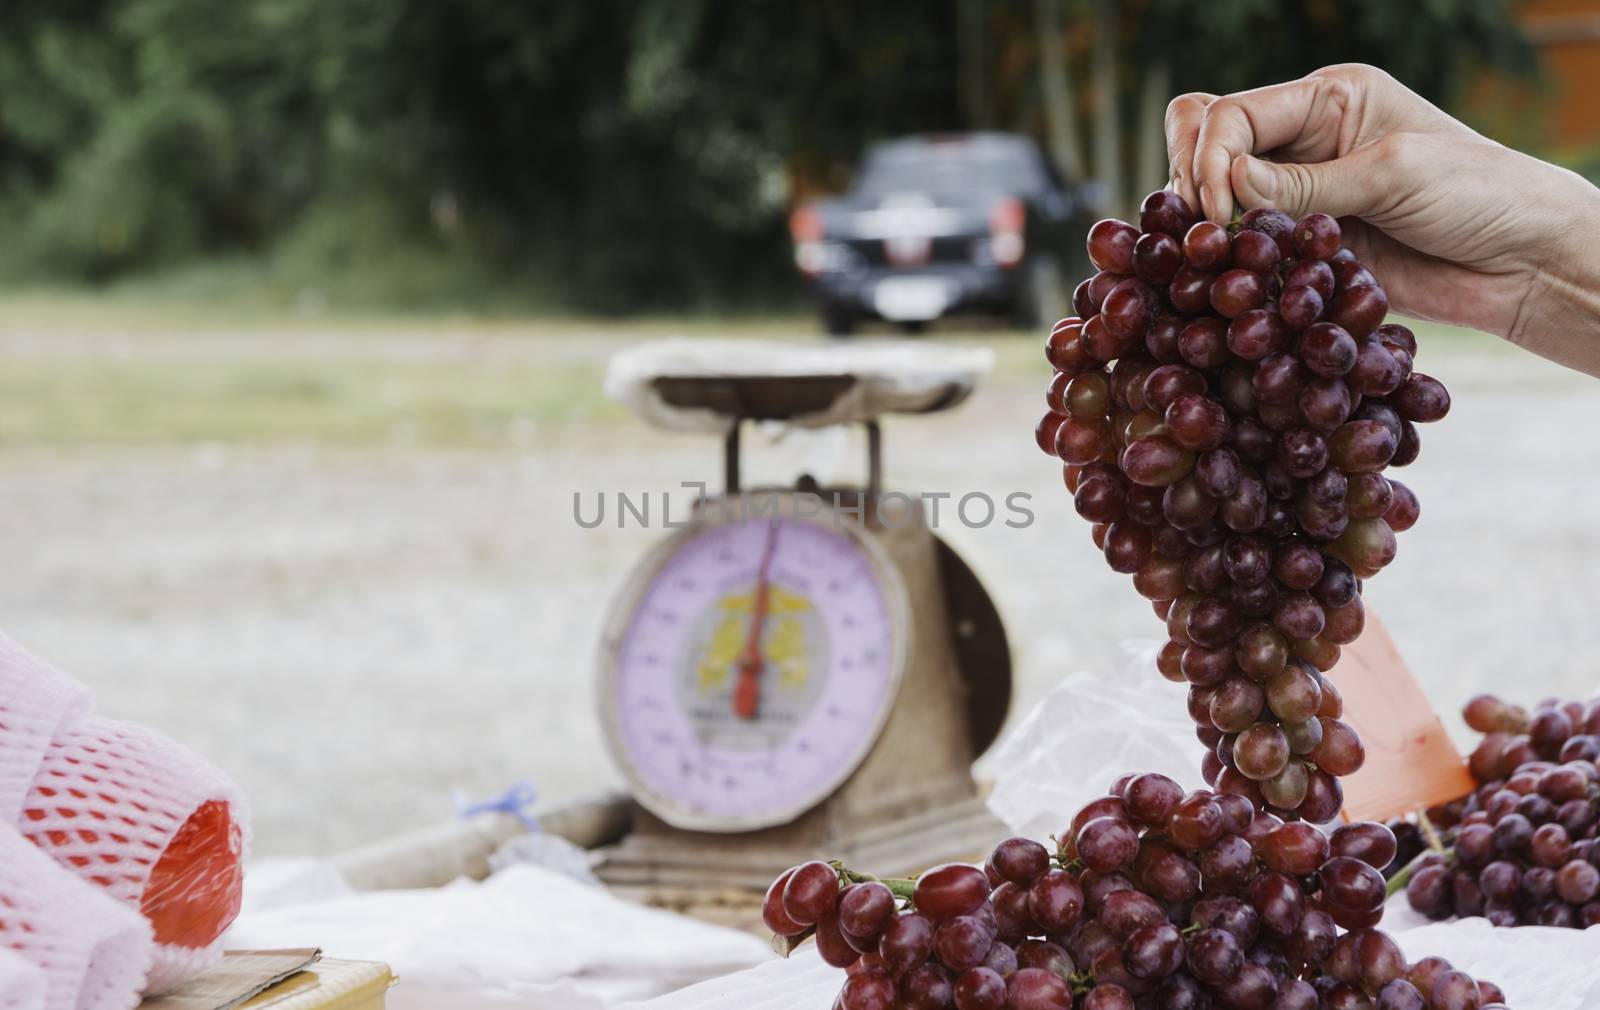 Young woman choosing grape at supermarket. Healthy and lifestyle by kirisa99